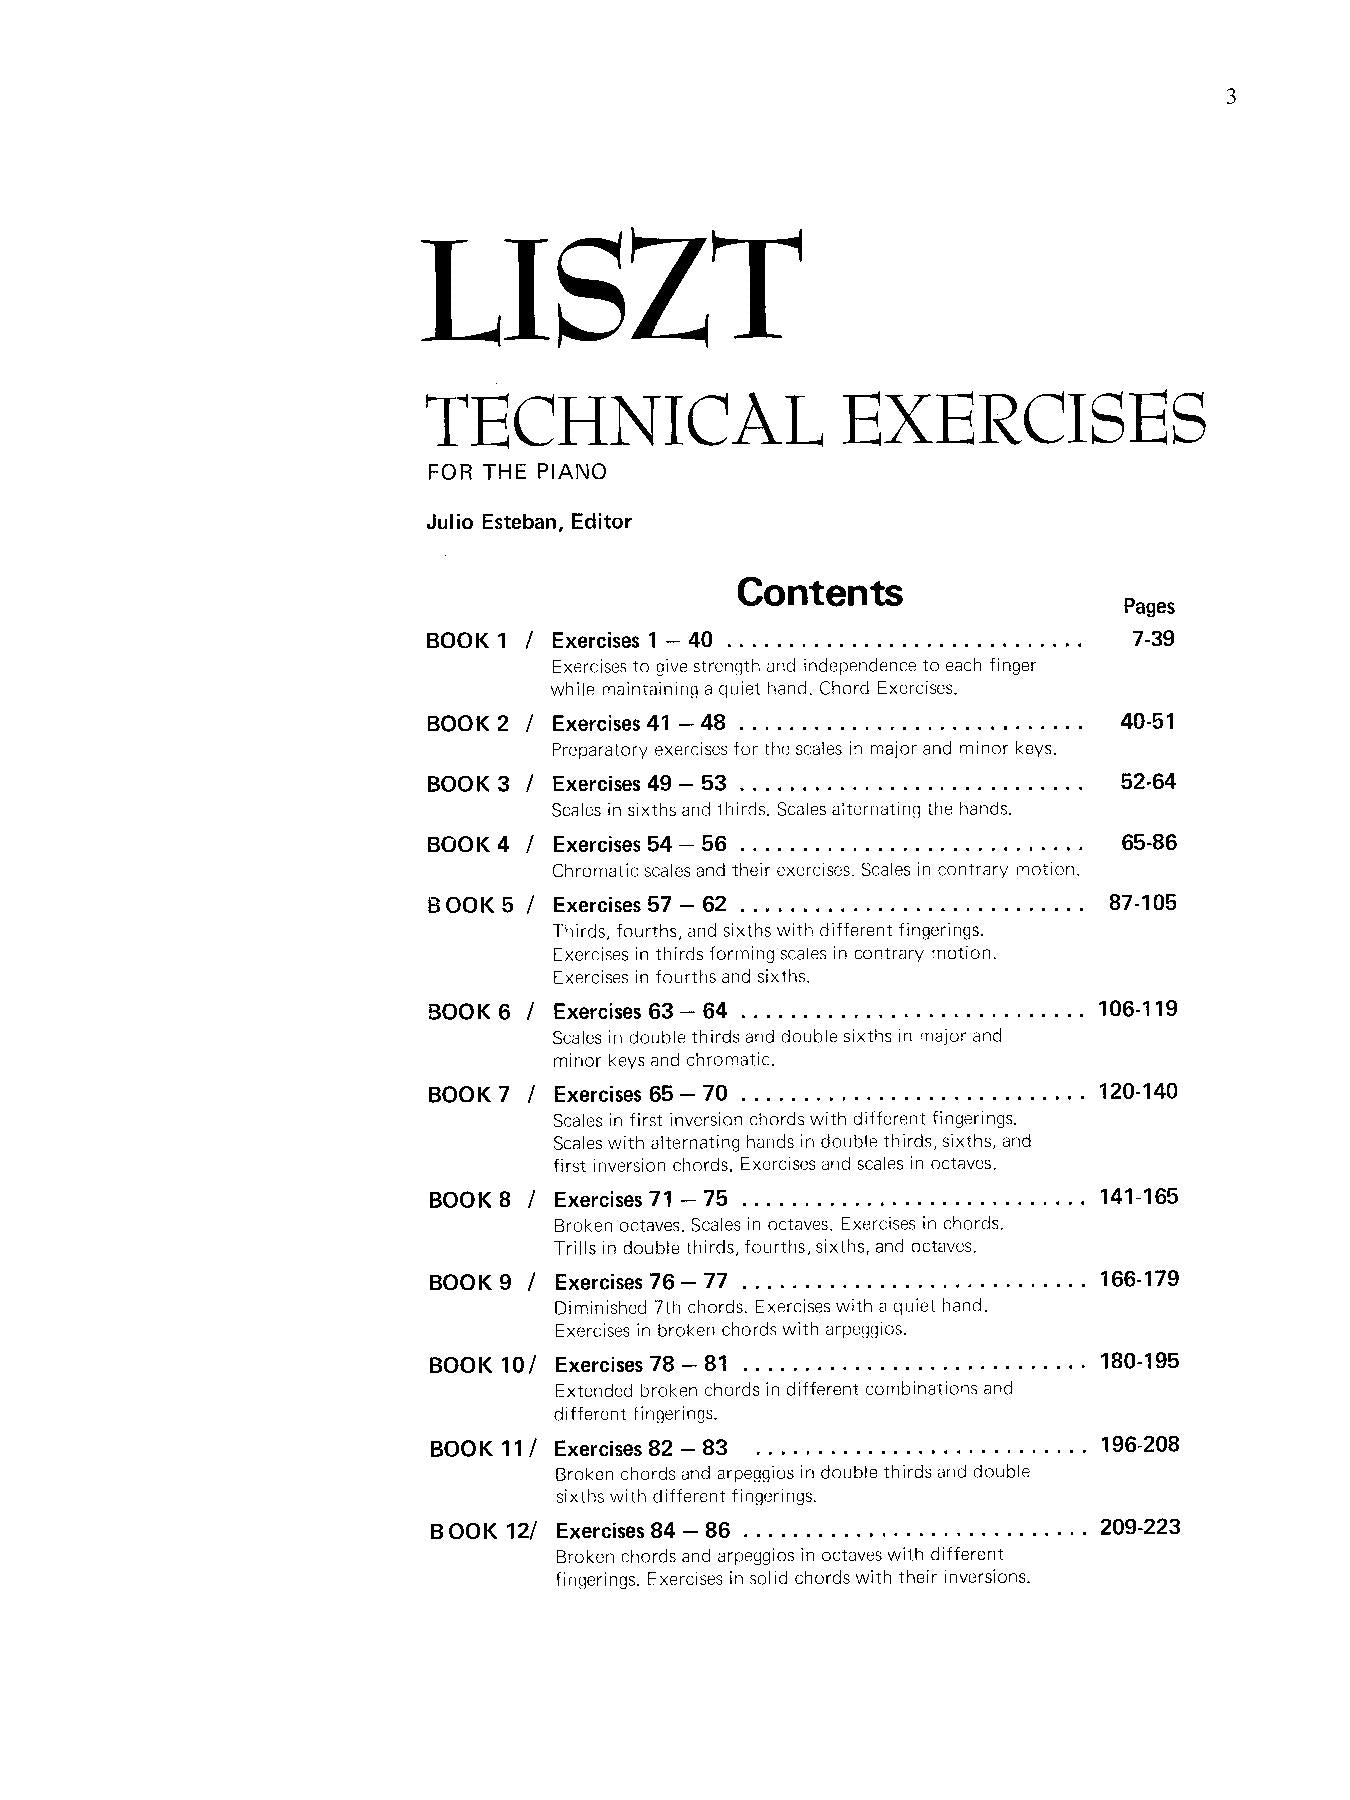 Liszt: Technical Exercises (Complete)